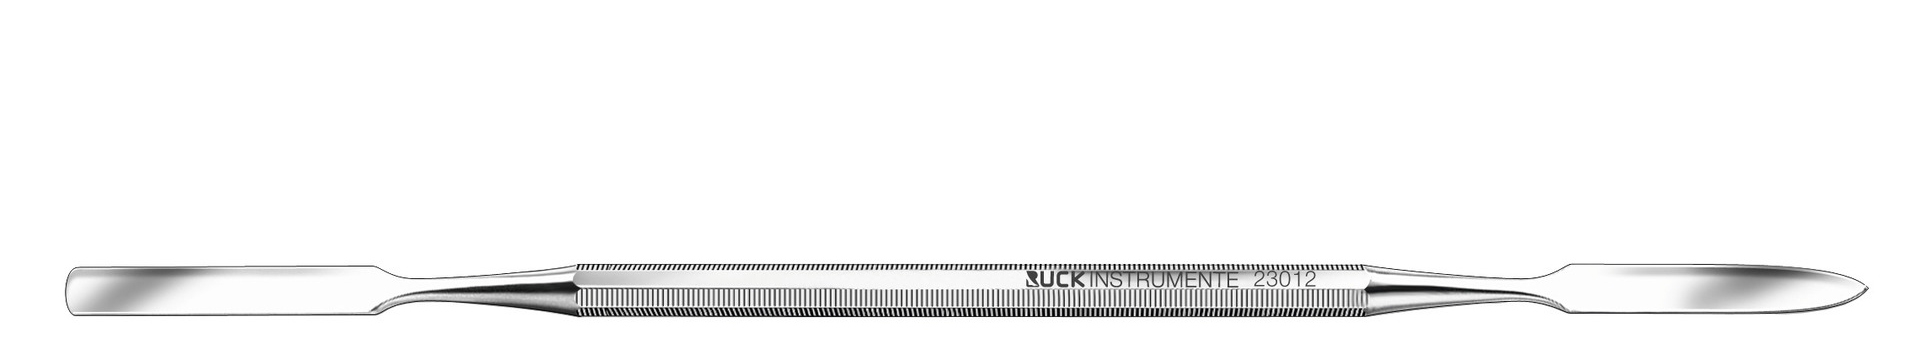 RUCK INSTRUMENTE Doppelendiger Spatel | L 18 cm